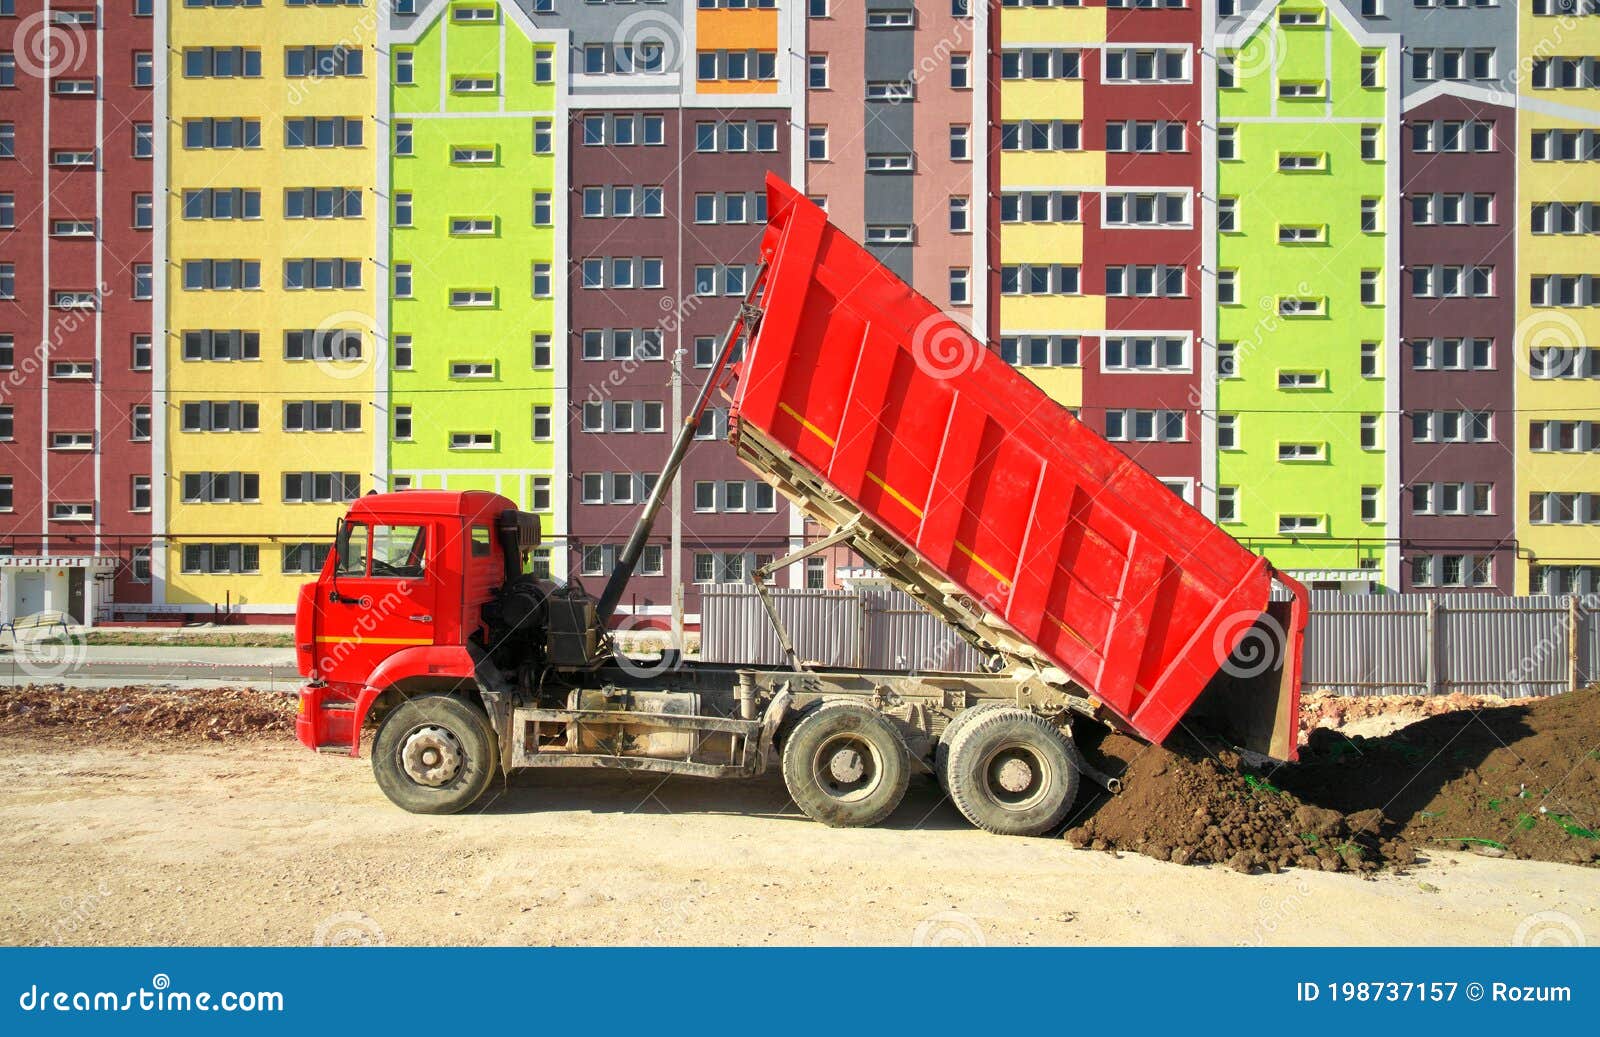 multistorey building apartment house and dump truck unload soil